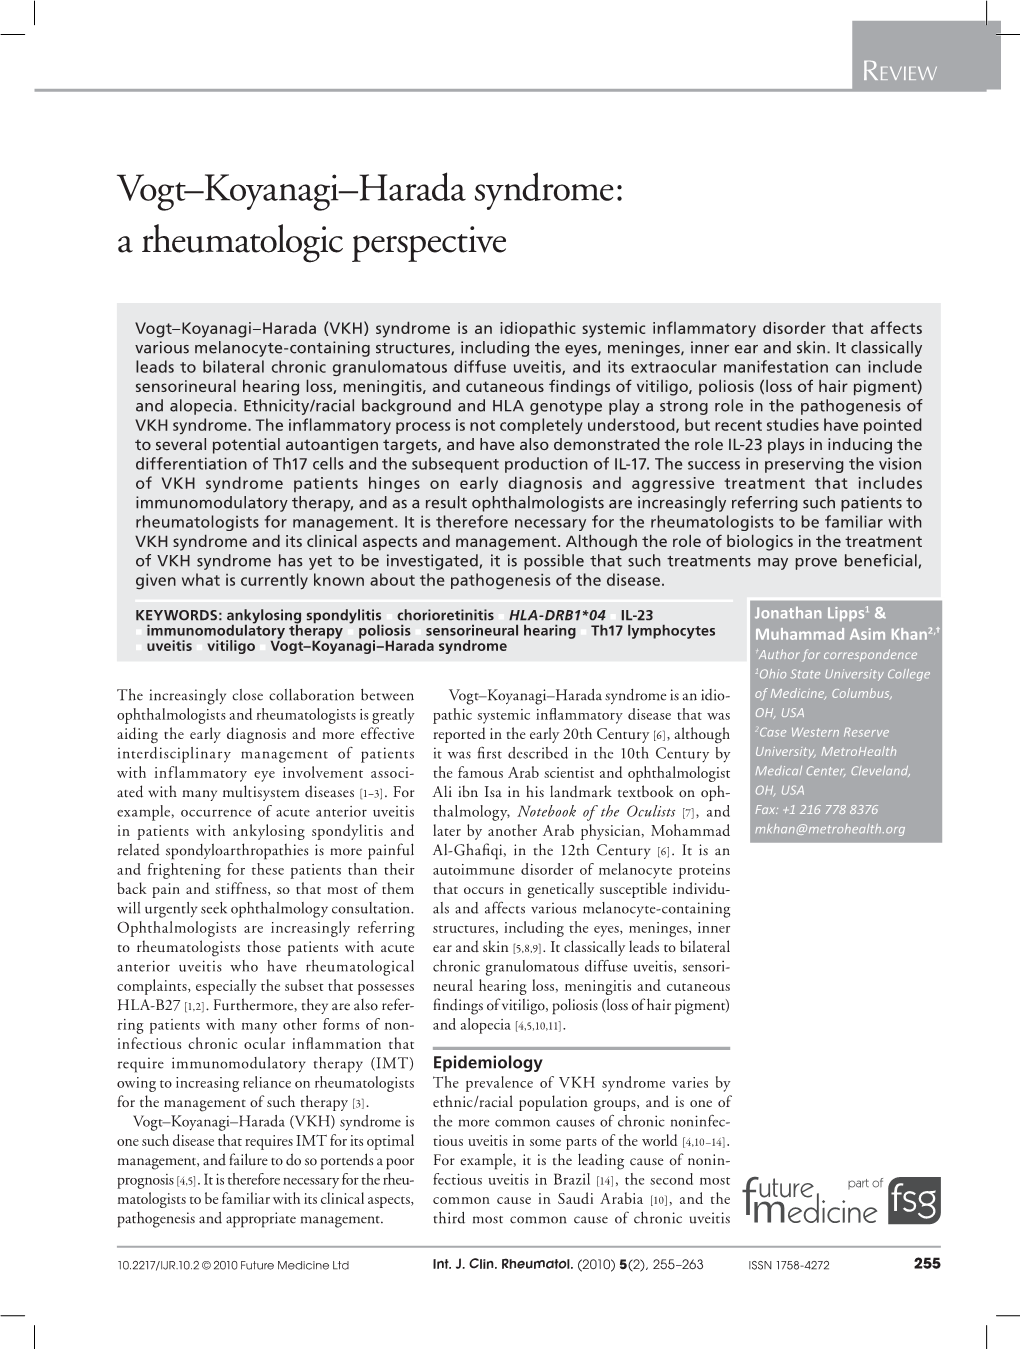 Vogt–Koyanagi–Harada Syndrome: a Rheumatologic Perspective